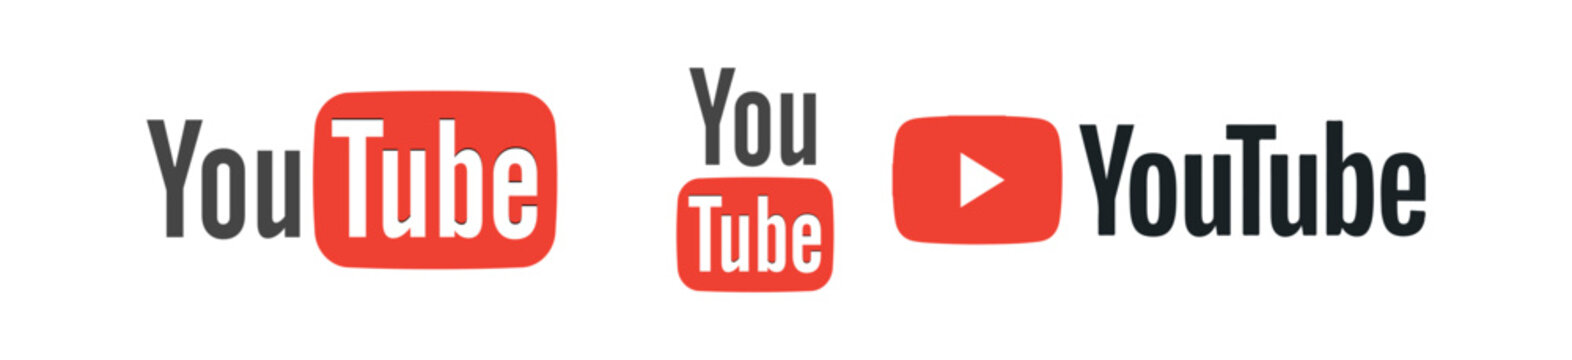 Youtube logo set on transparent background. EPS and PNG image.